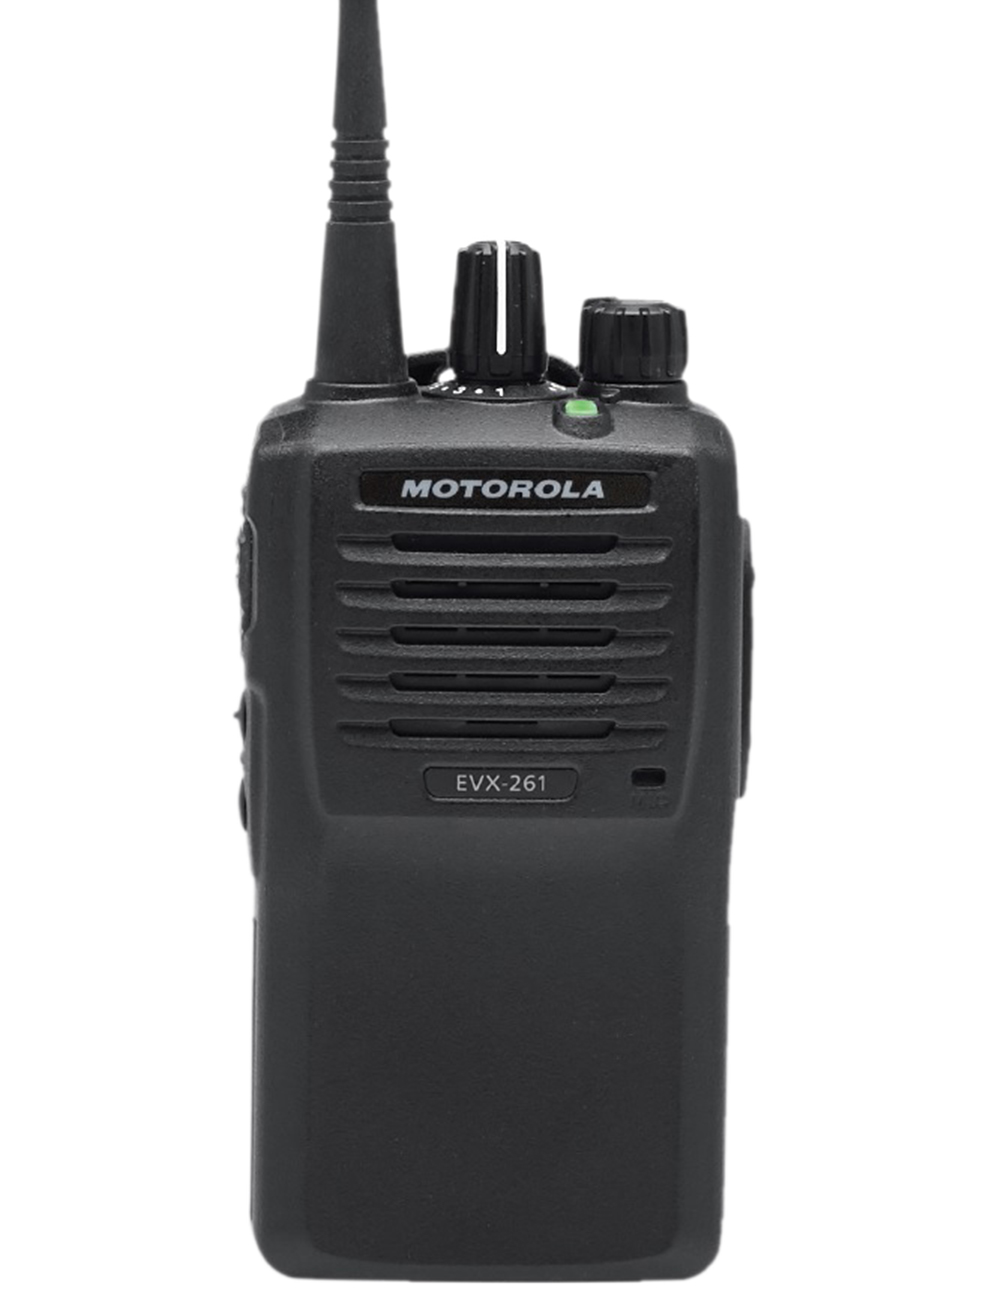 Bộ đàm Kỹ thuật số Motorola EVX-261